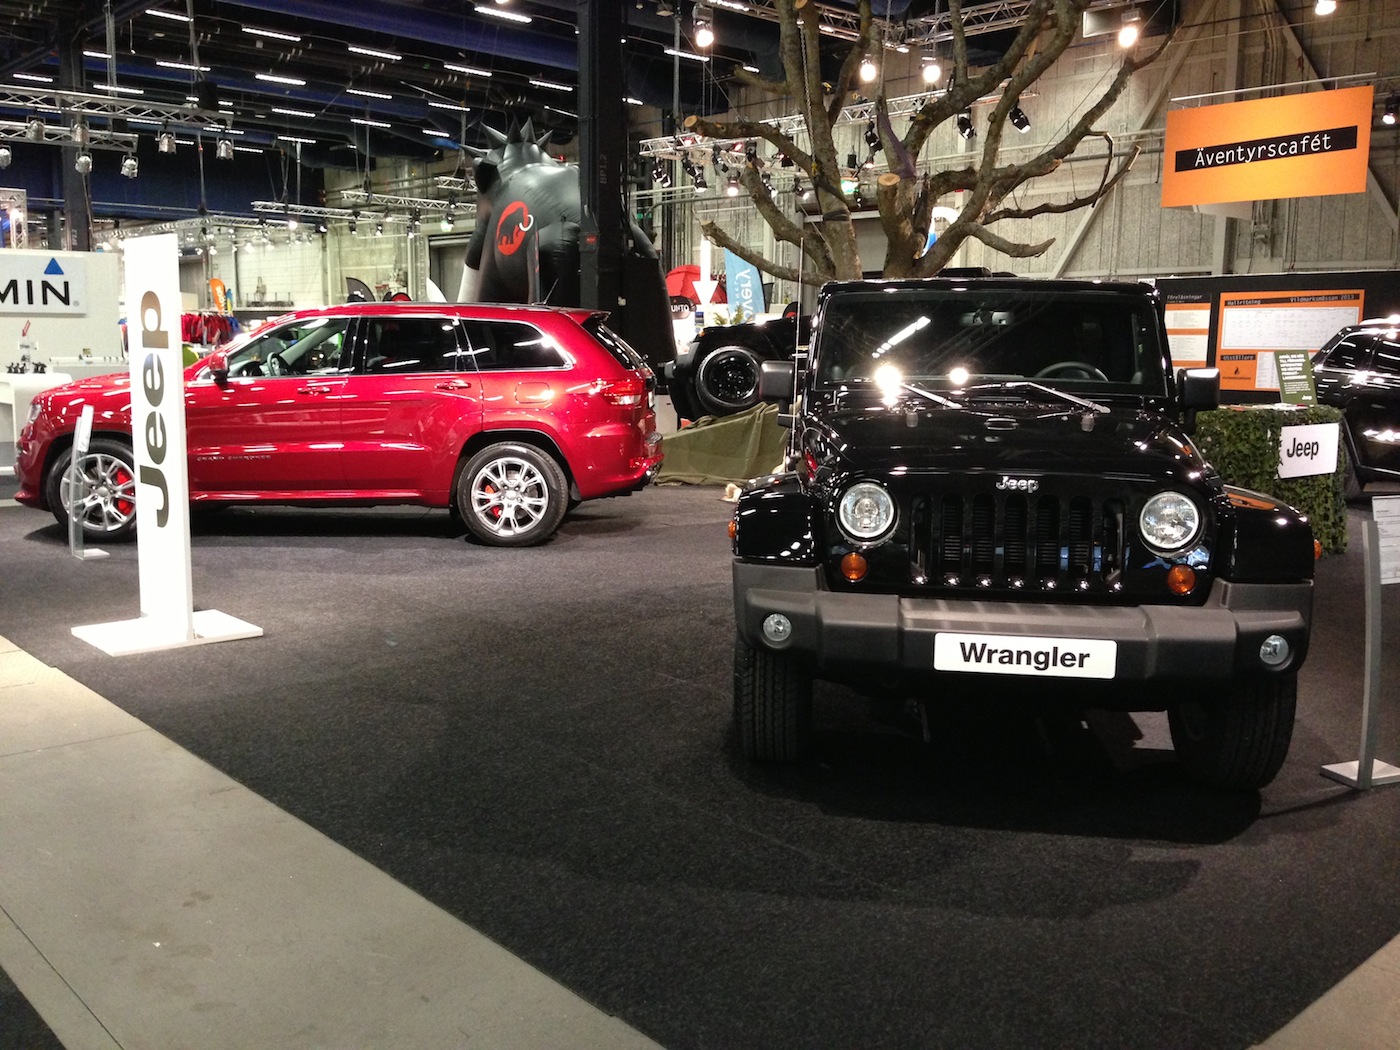 Jeep visade sina nya modeller. Foto: Erik Hansson